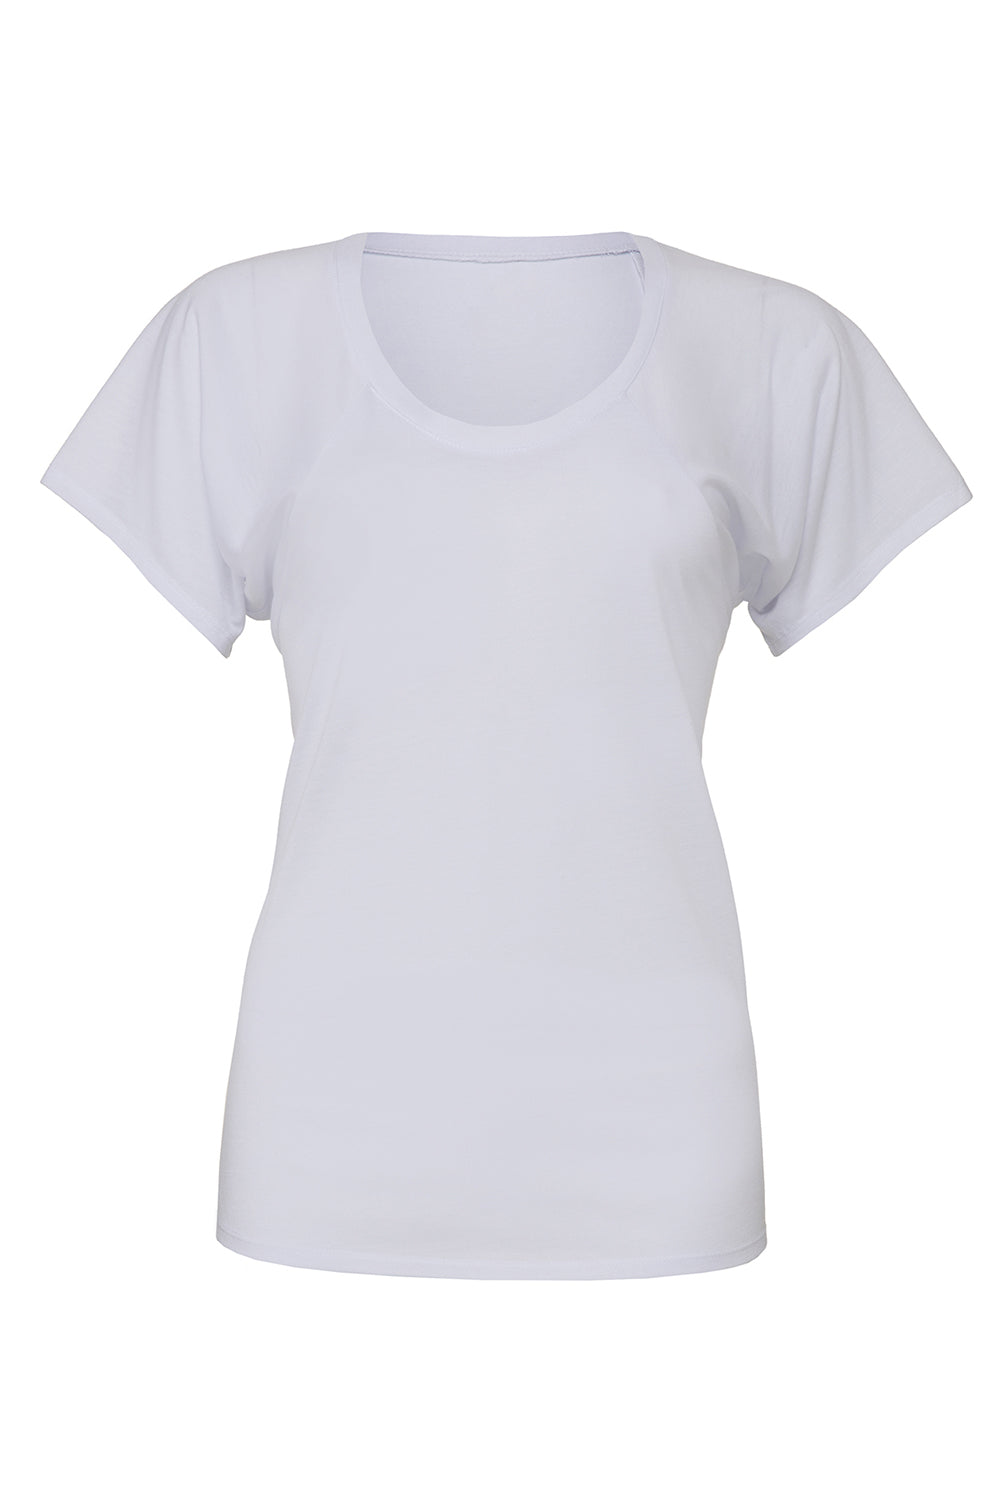 Bella + Canvas B8801/8801 Womens Flowy Short Sleeve Scoop Neck T-Shirt White Flat Front